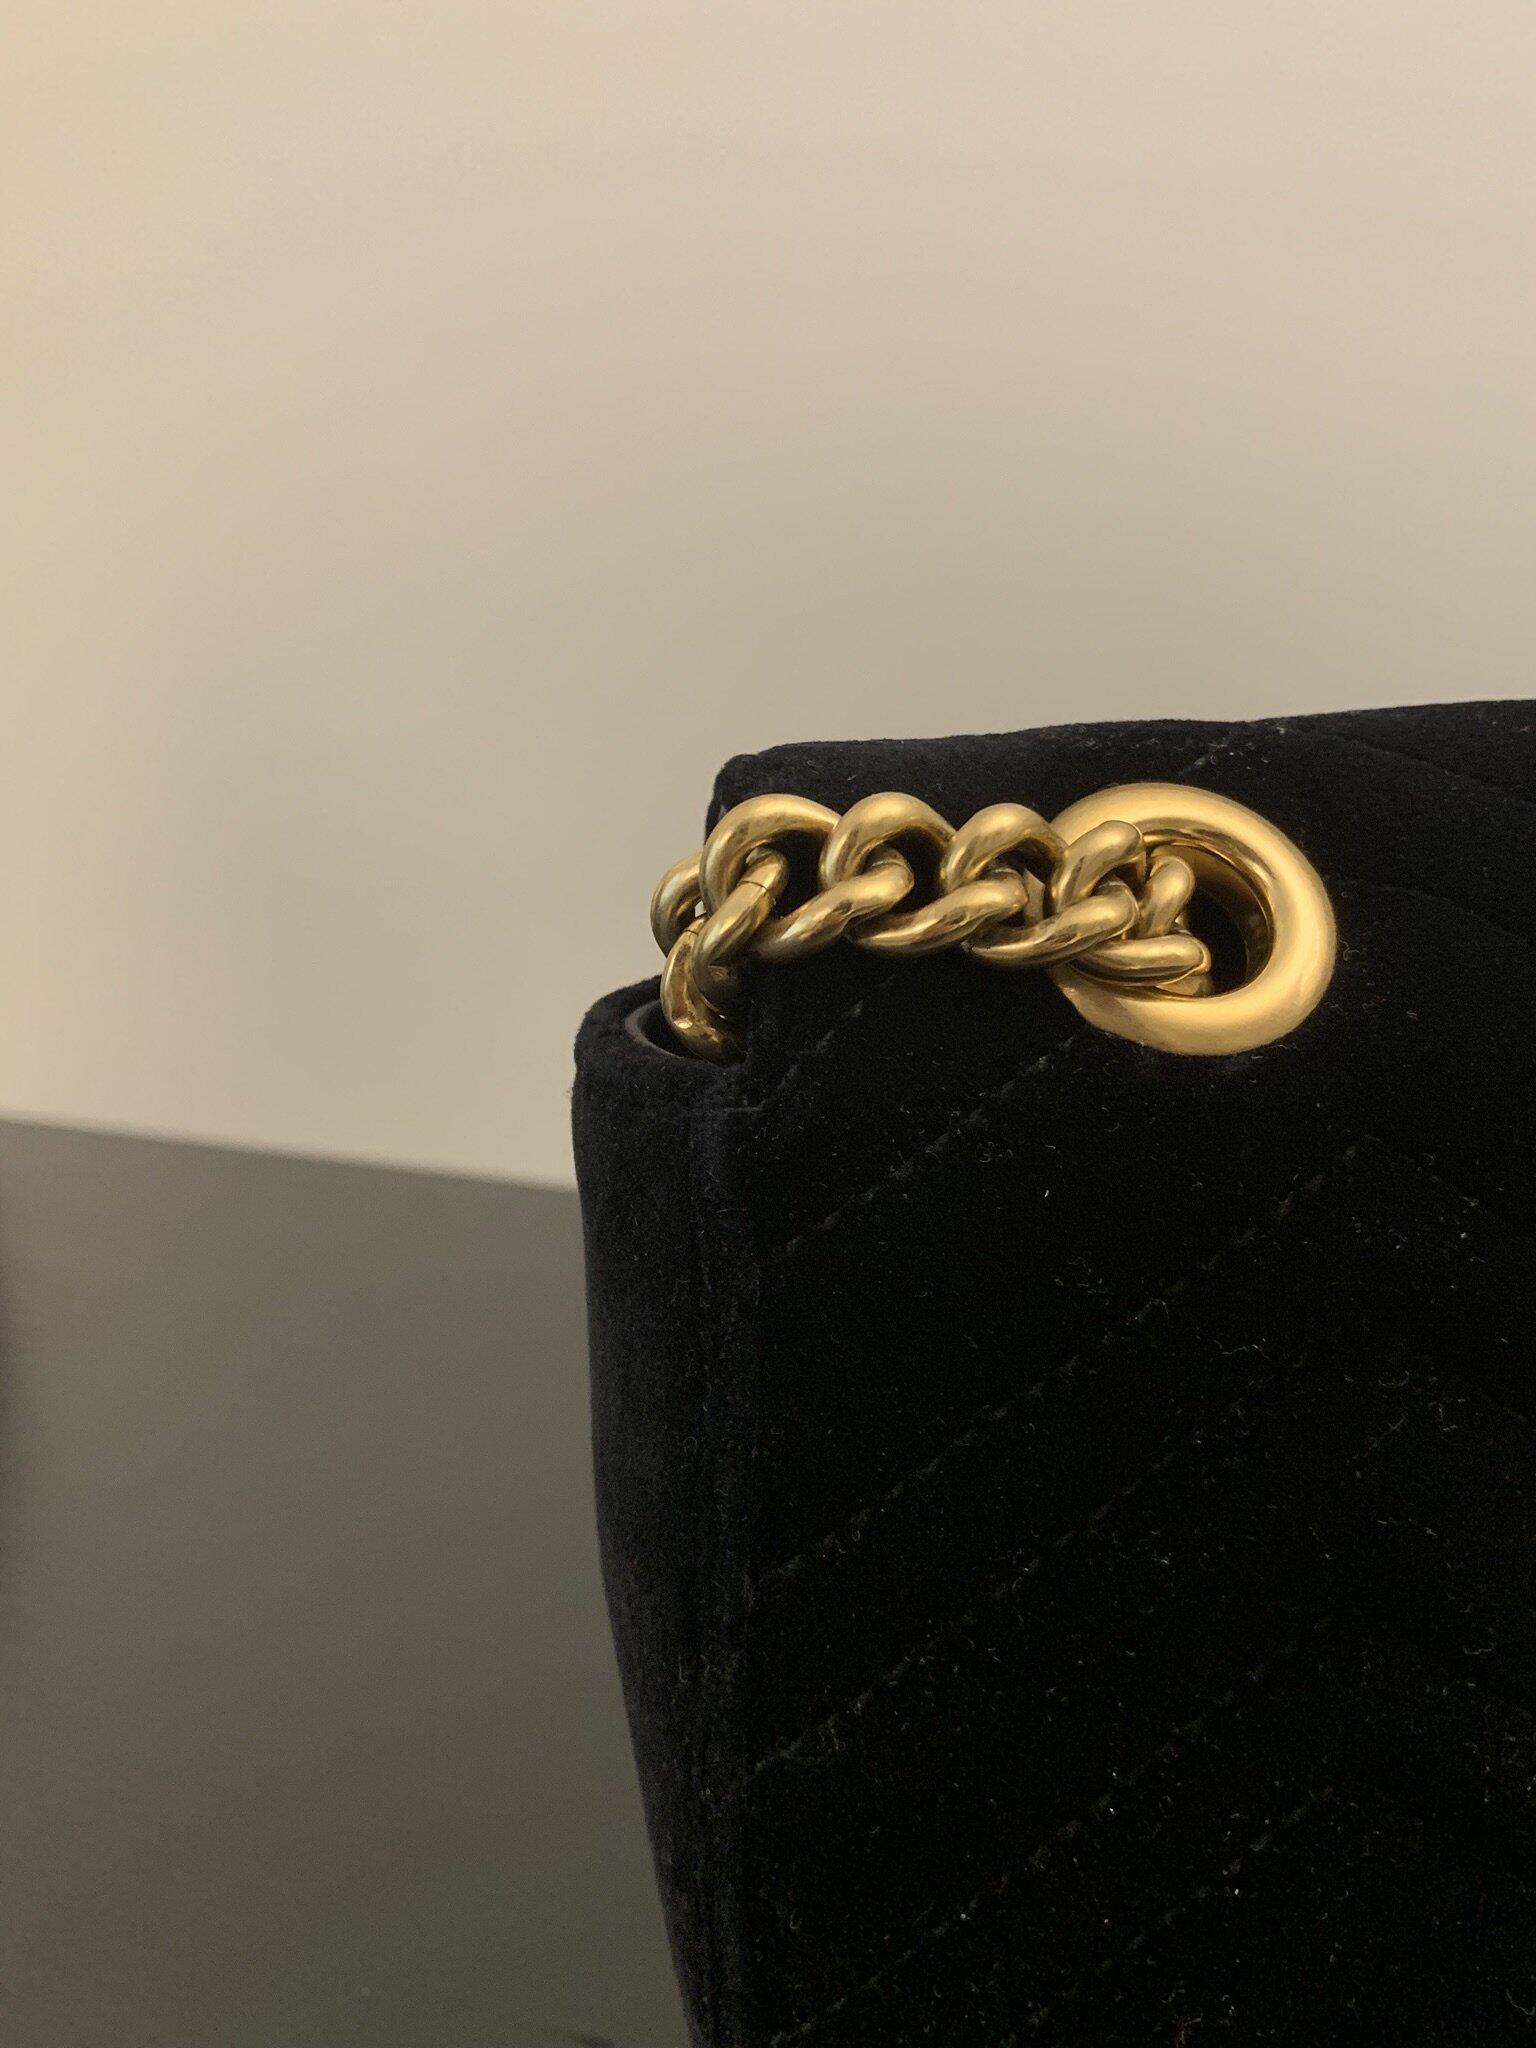 Gucci Marmont Velvet Bag Small 2Yr Wear & Tear / Mod Shots + Whats